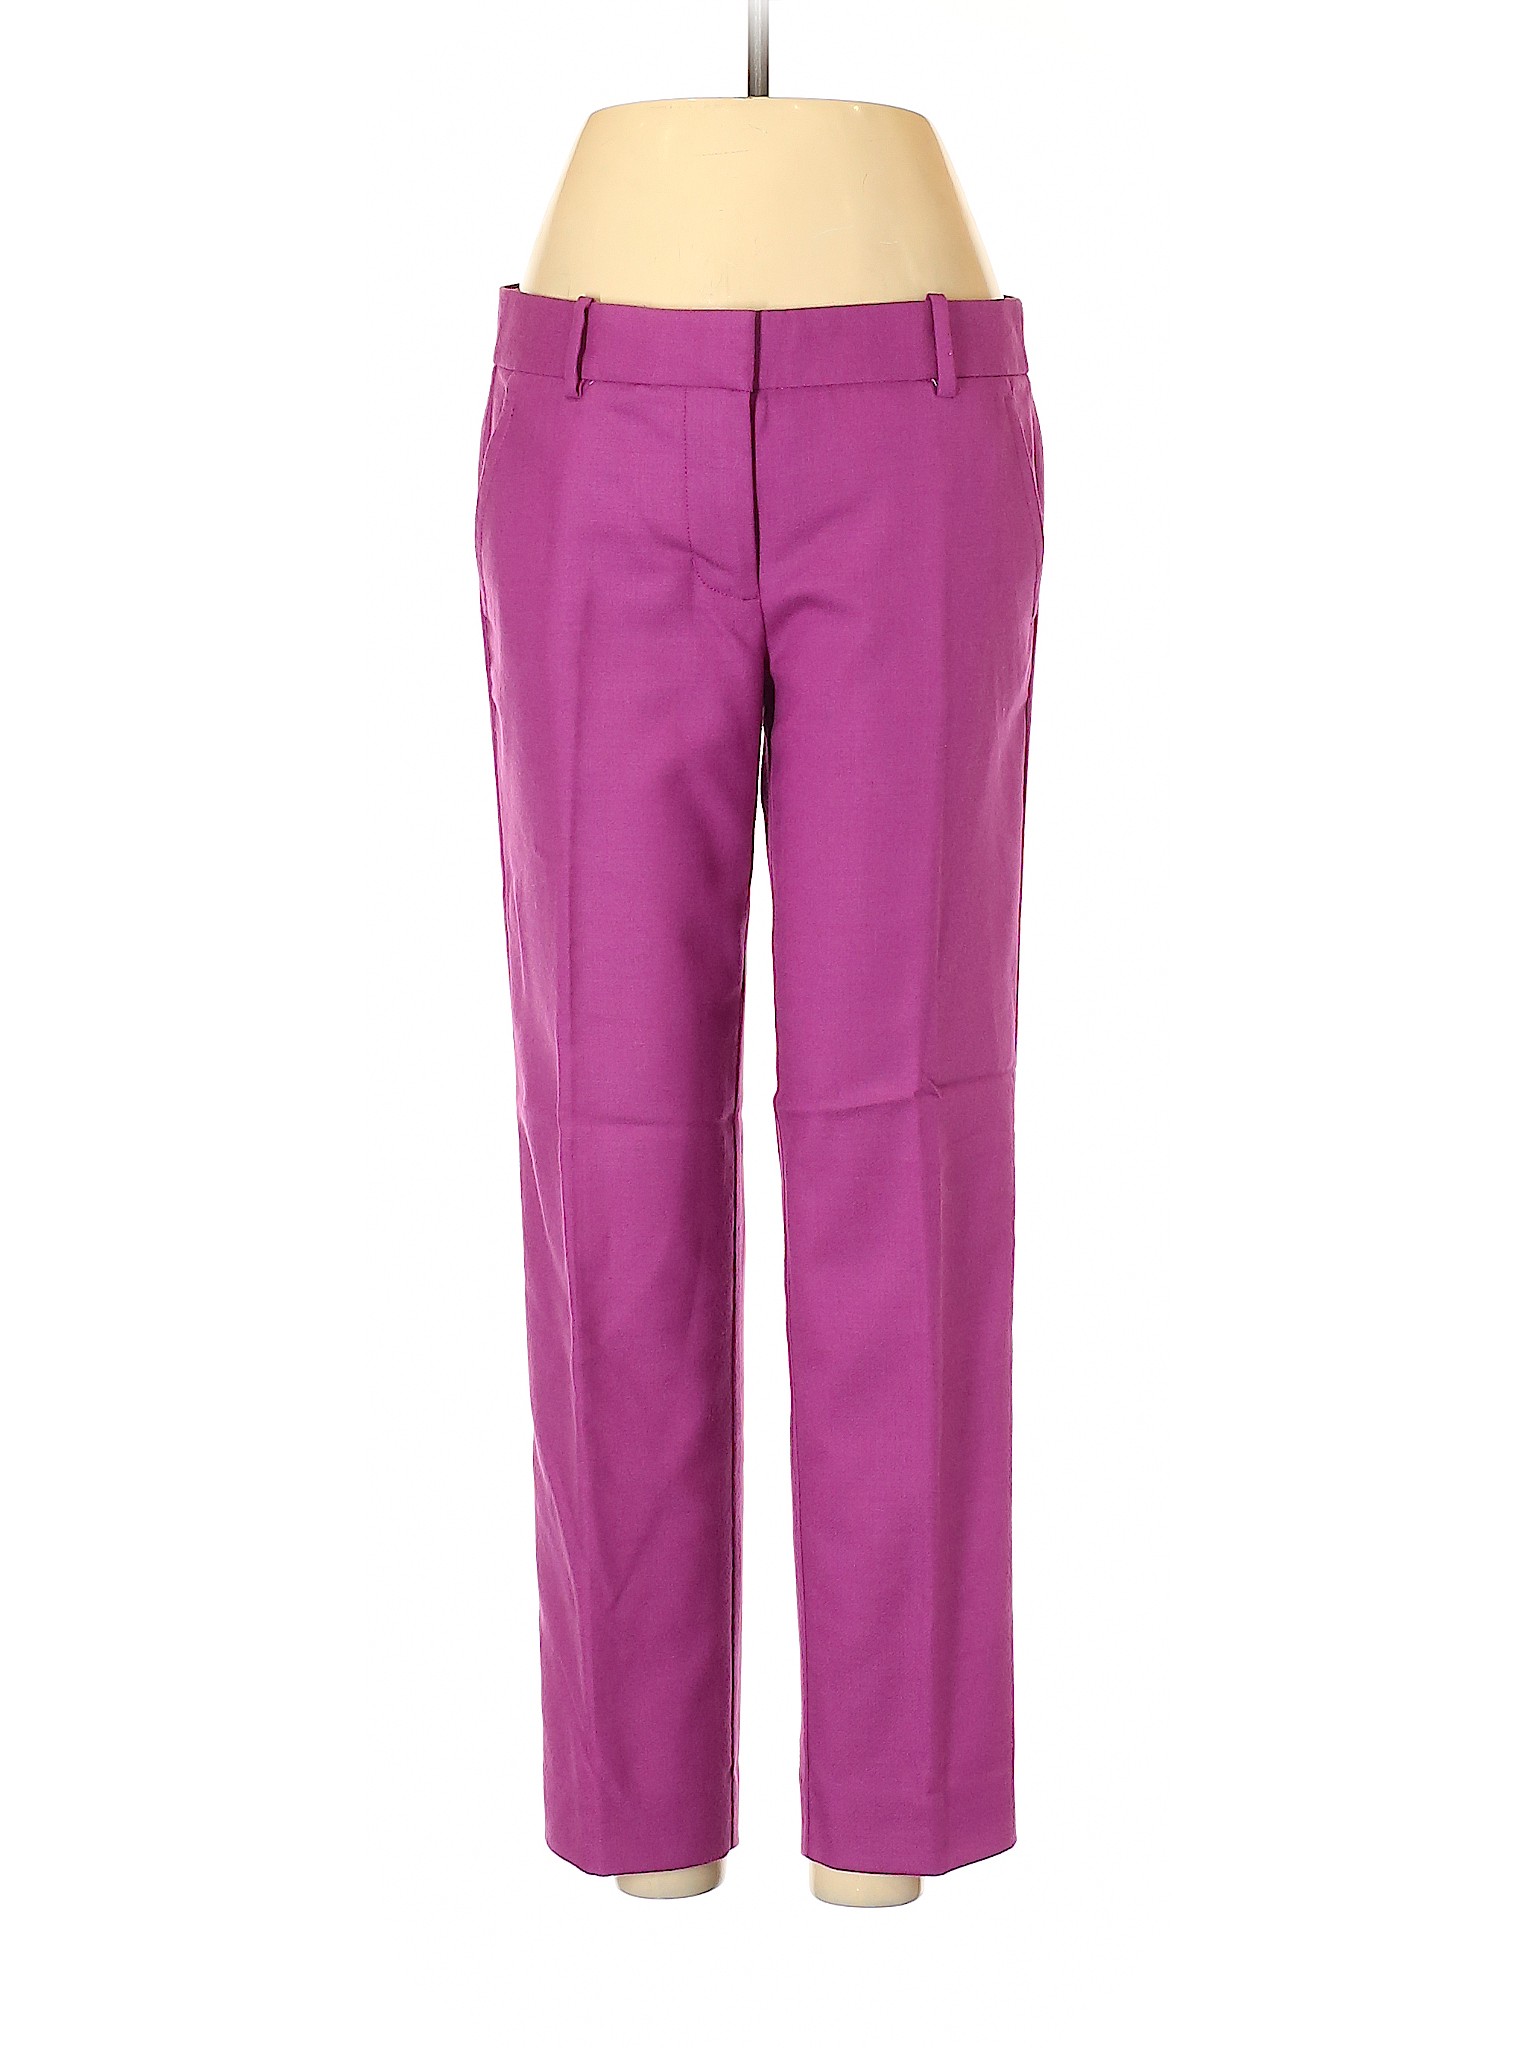 H&M Women Purple Dress Pants 4 | eBay